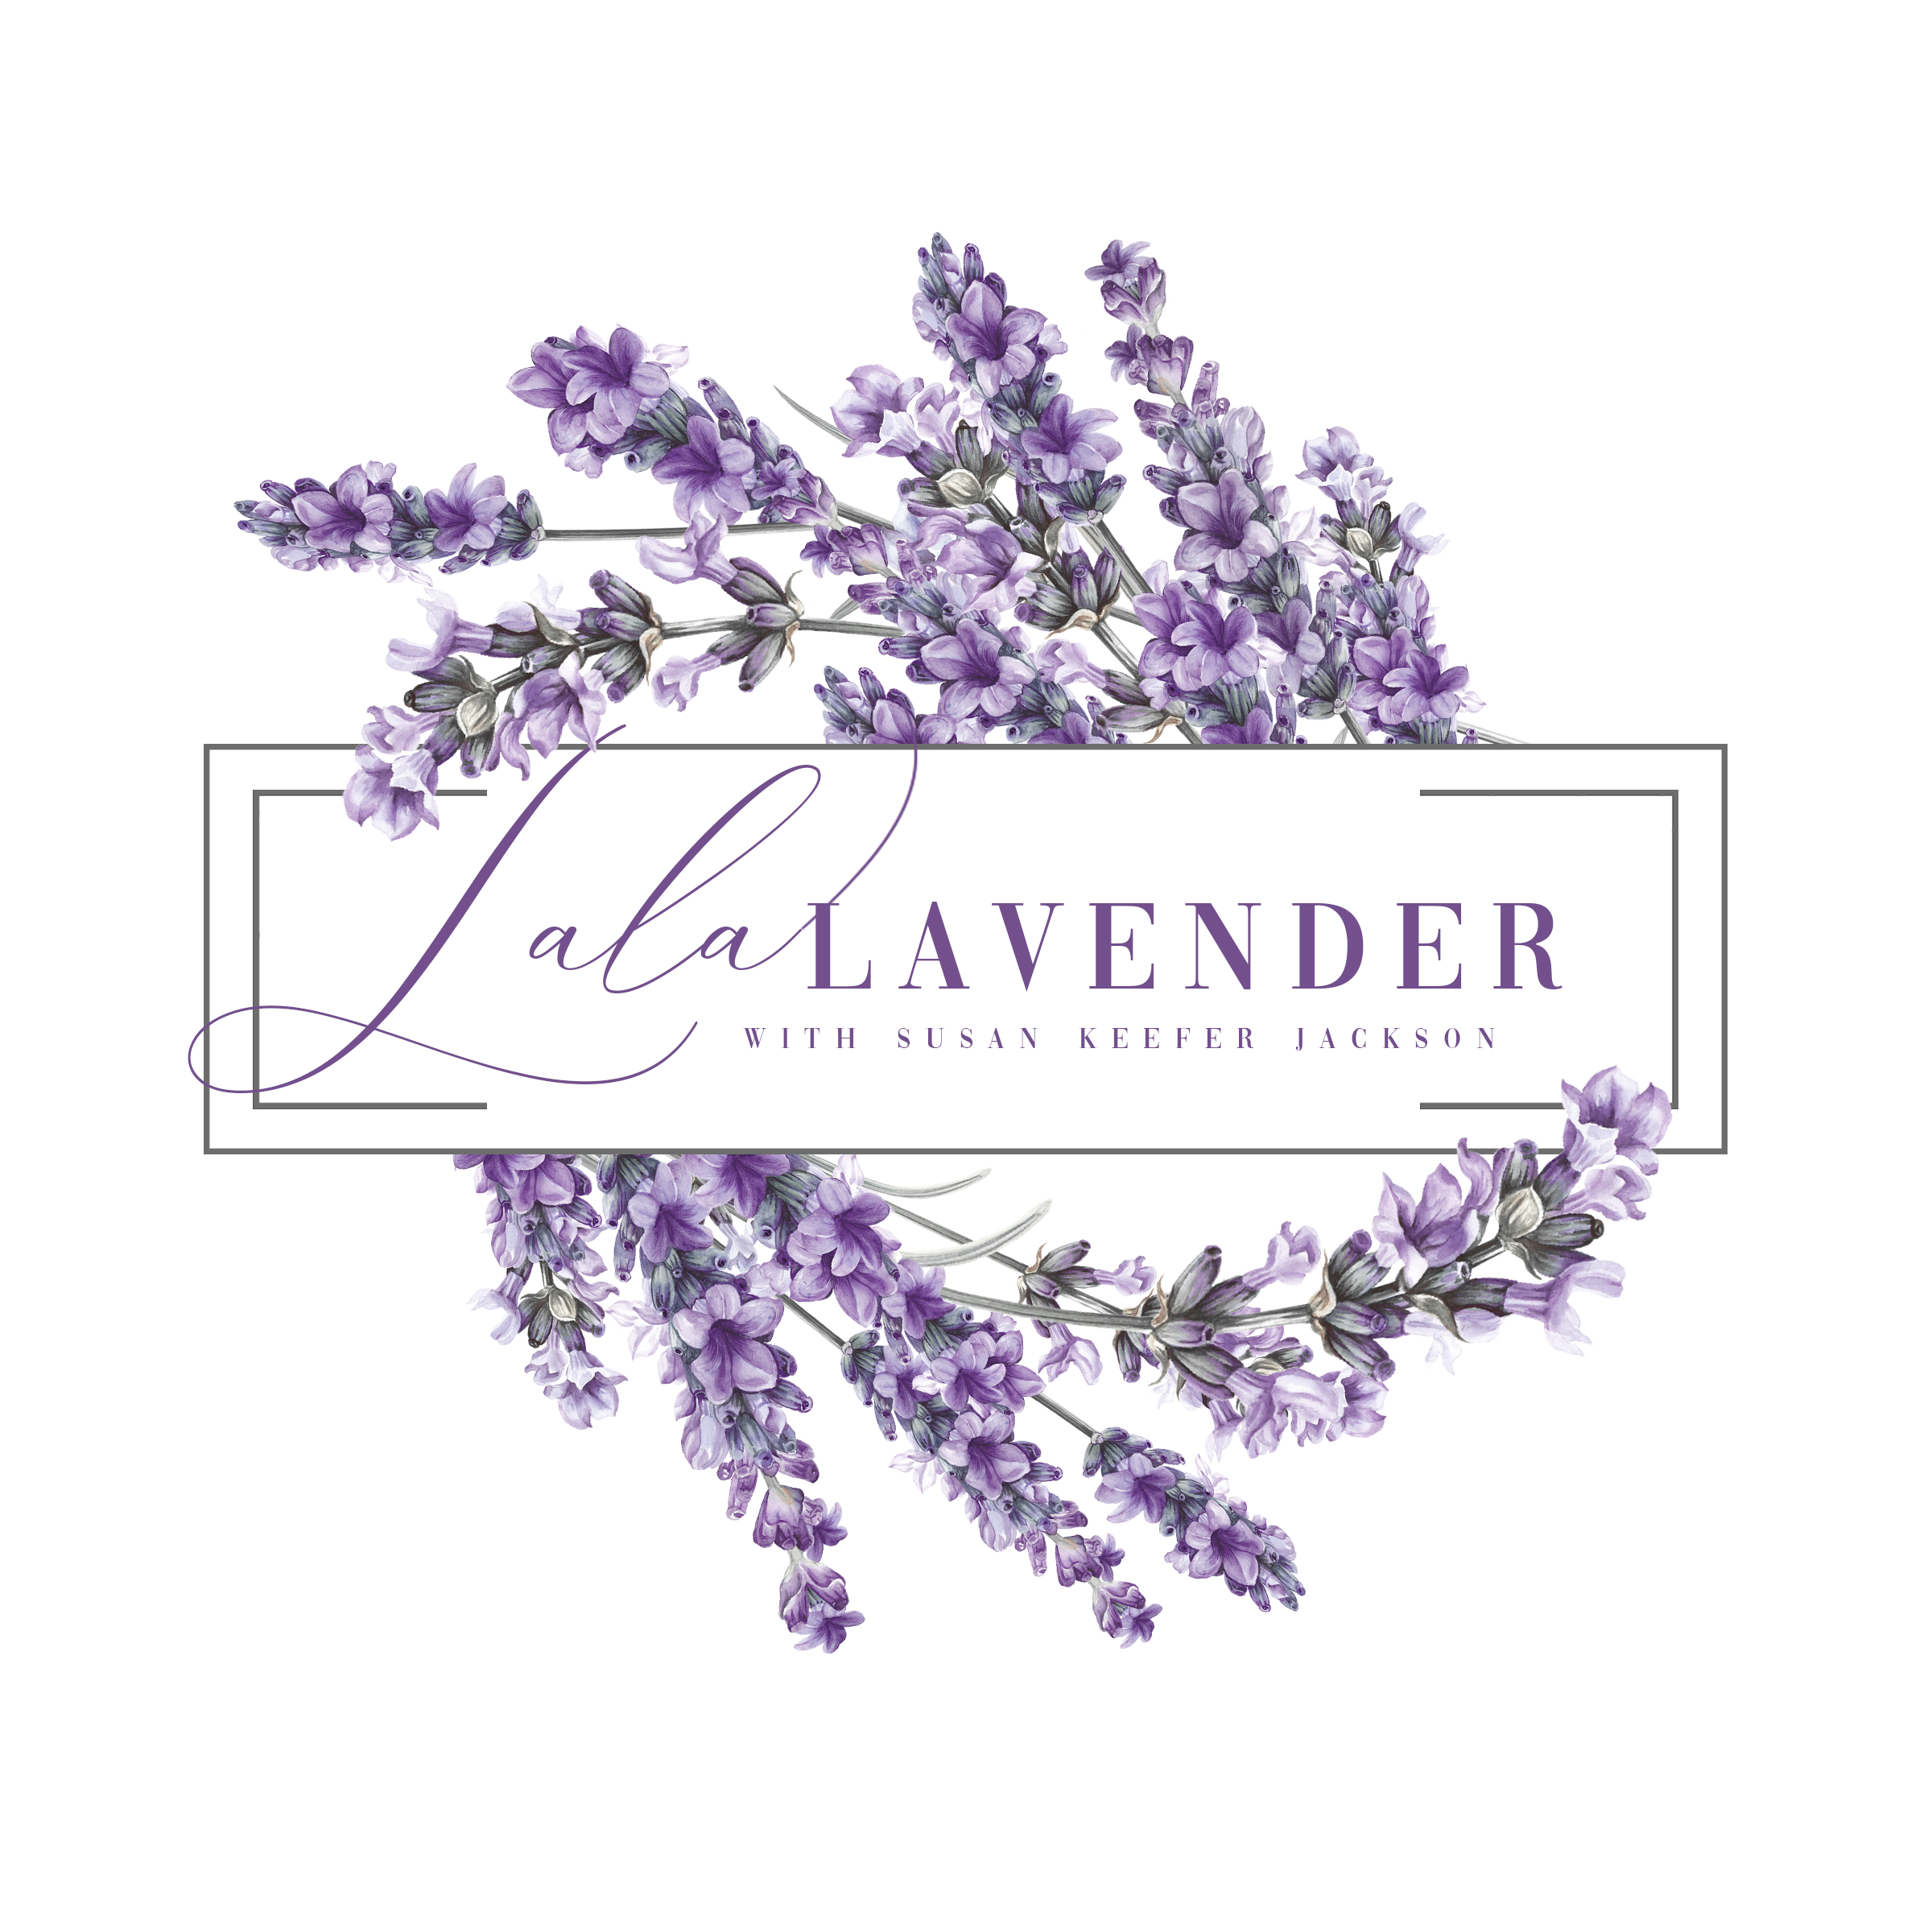 Lala Lavender